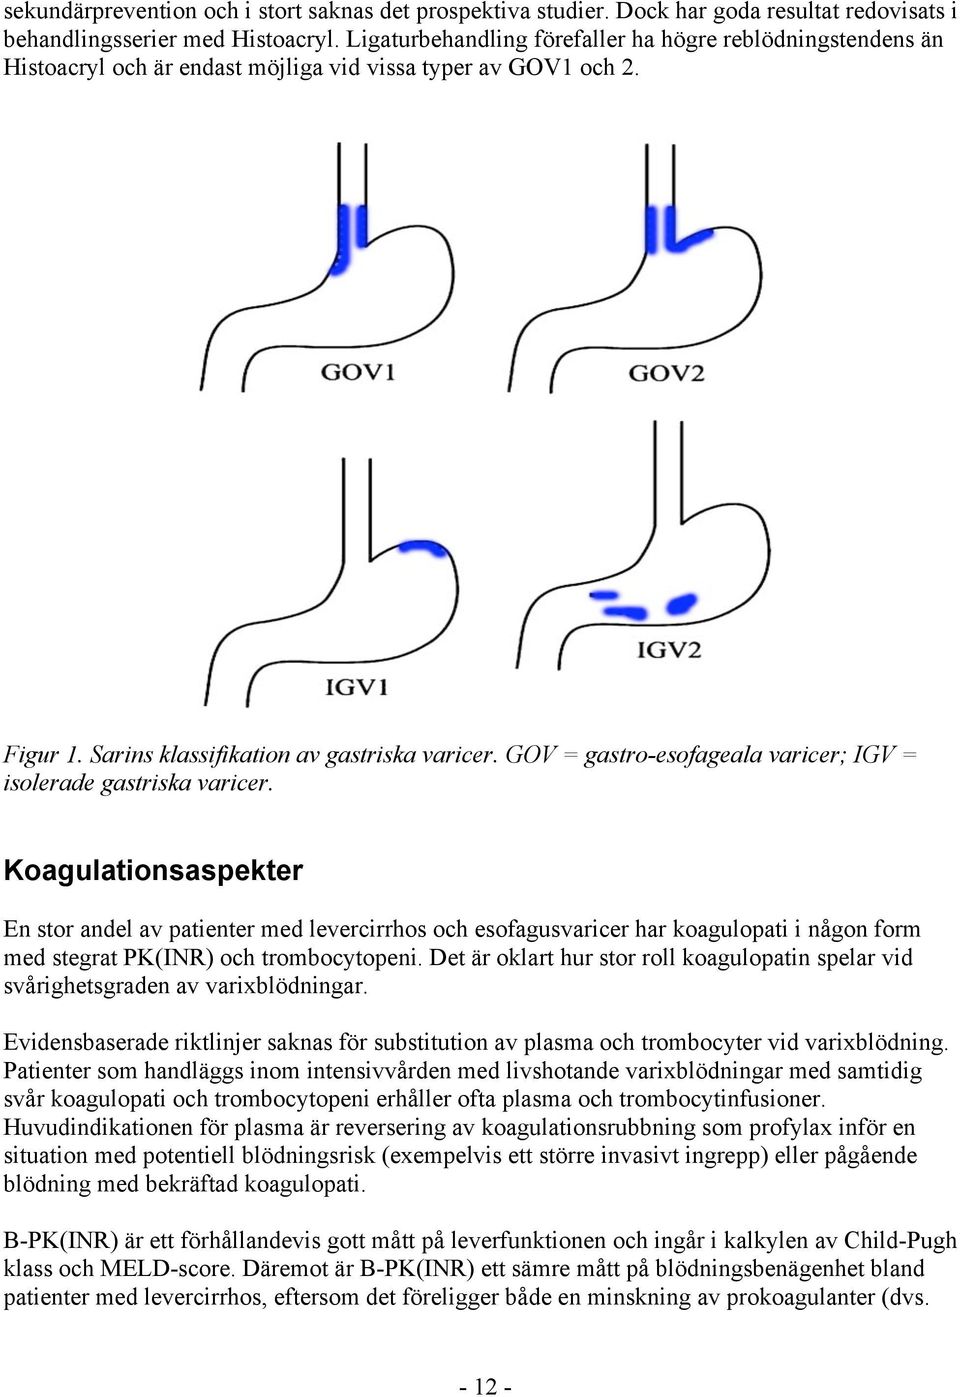 GOV = gastro-esofageala varicer; IGV = isolerade gastriska varicer.